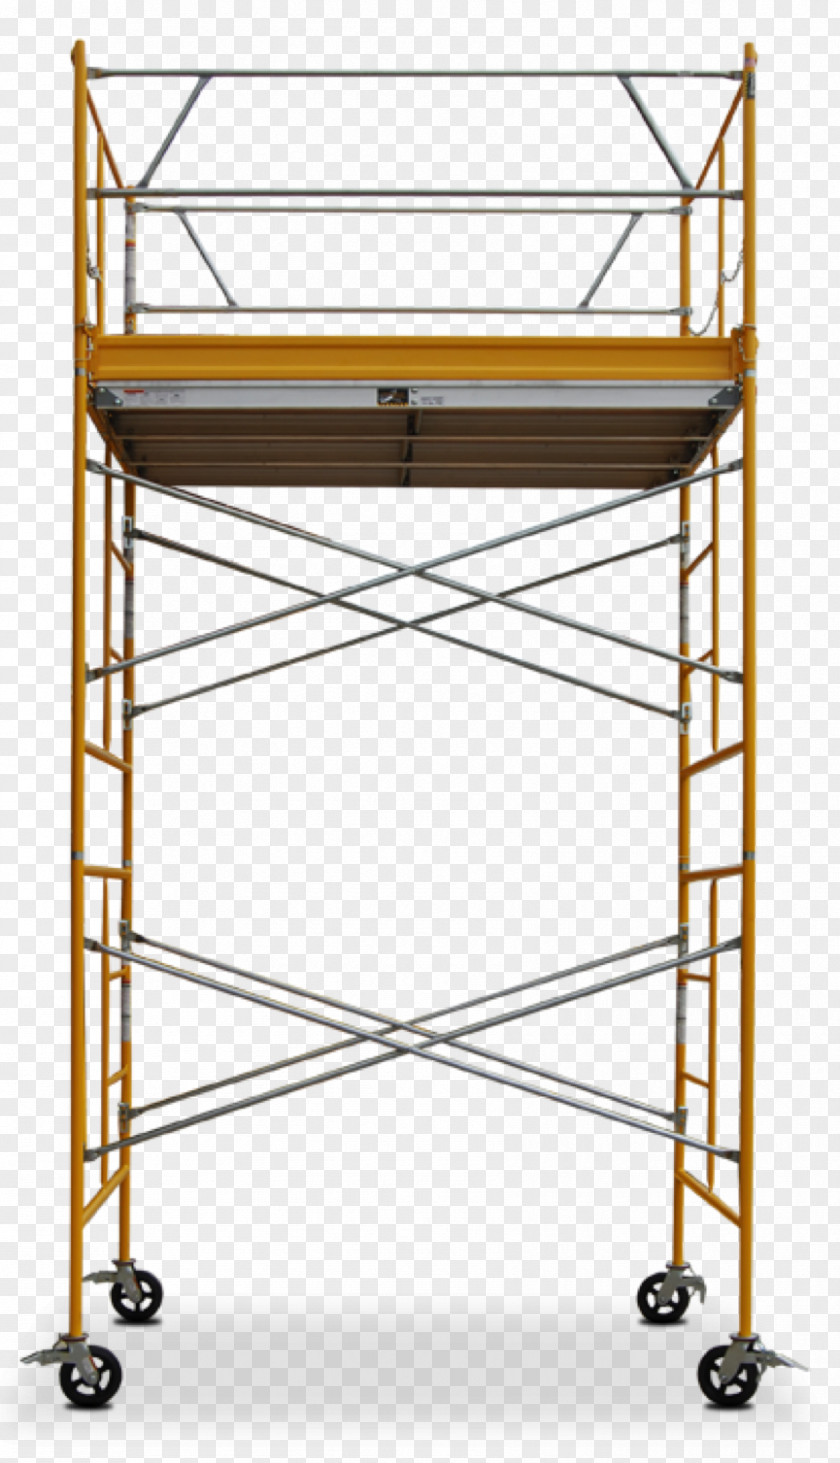 Ladder Scaffolding Aerial Work Platform Architectural Engineering Jack PNG